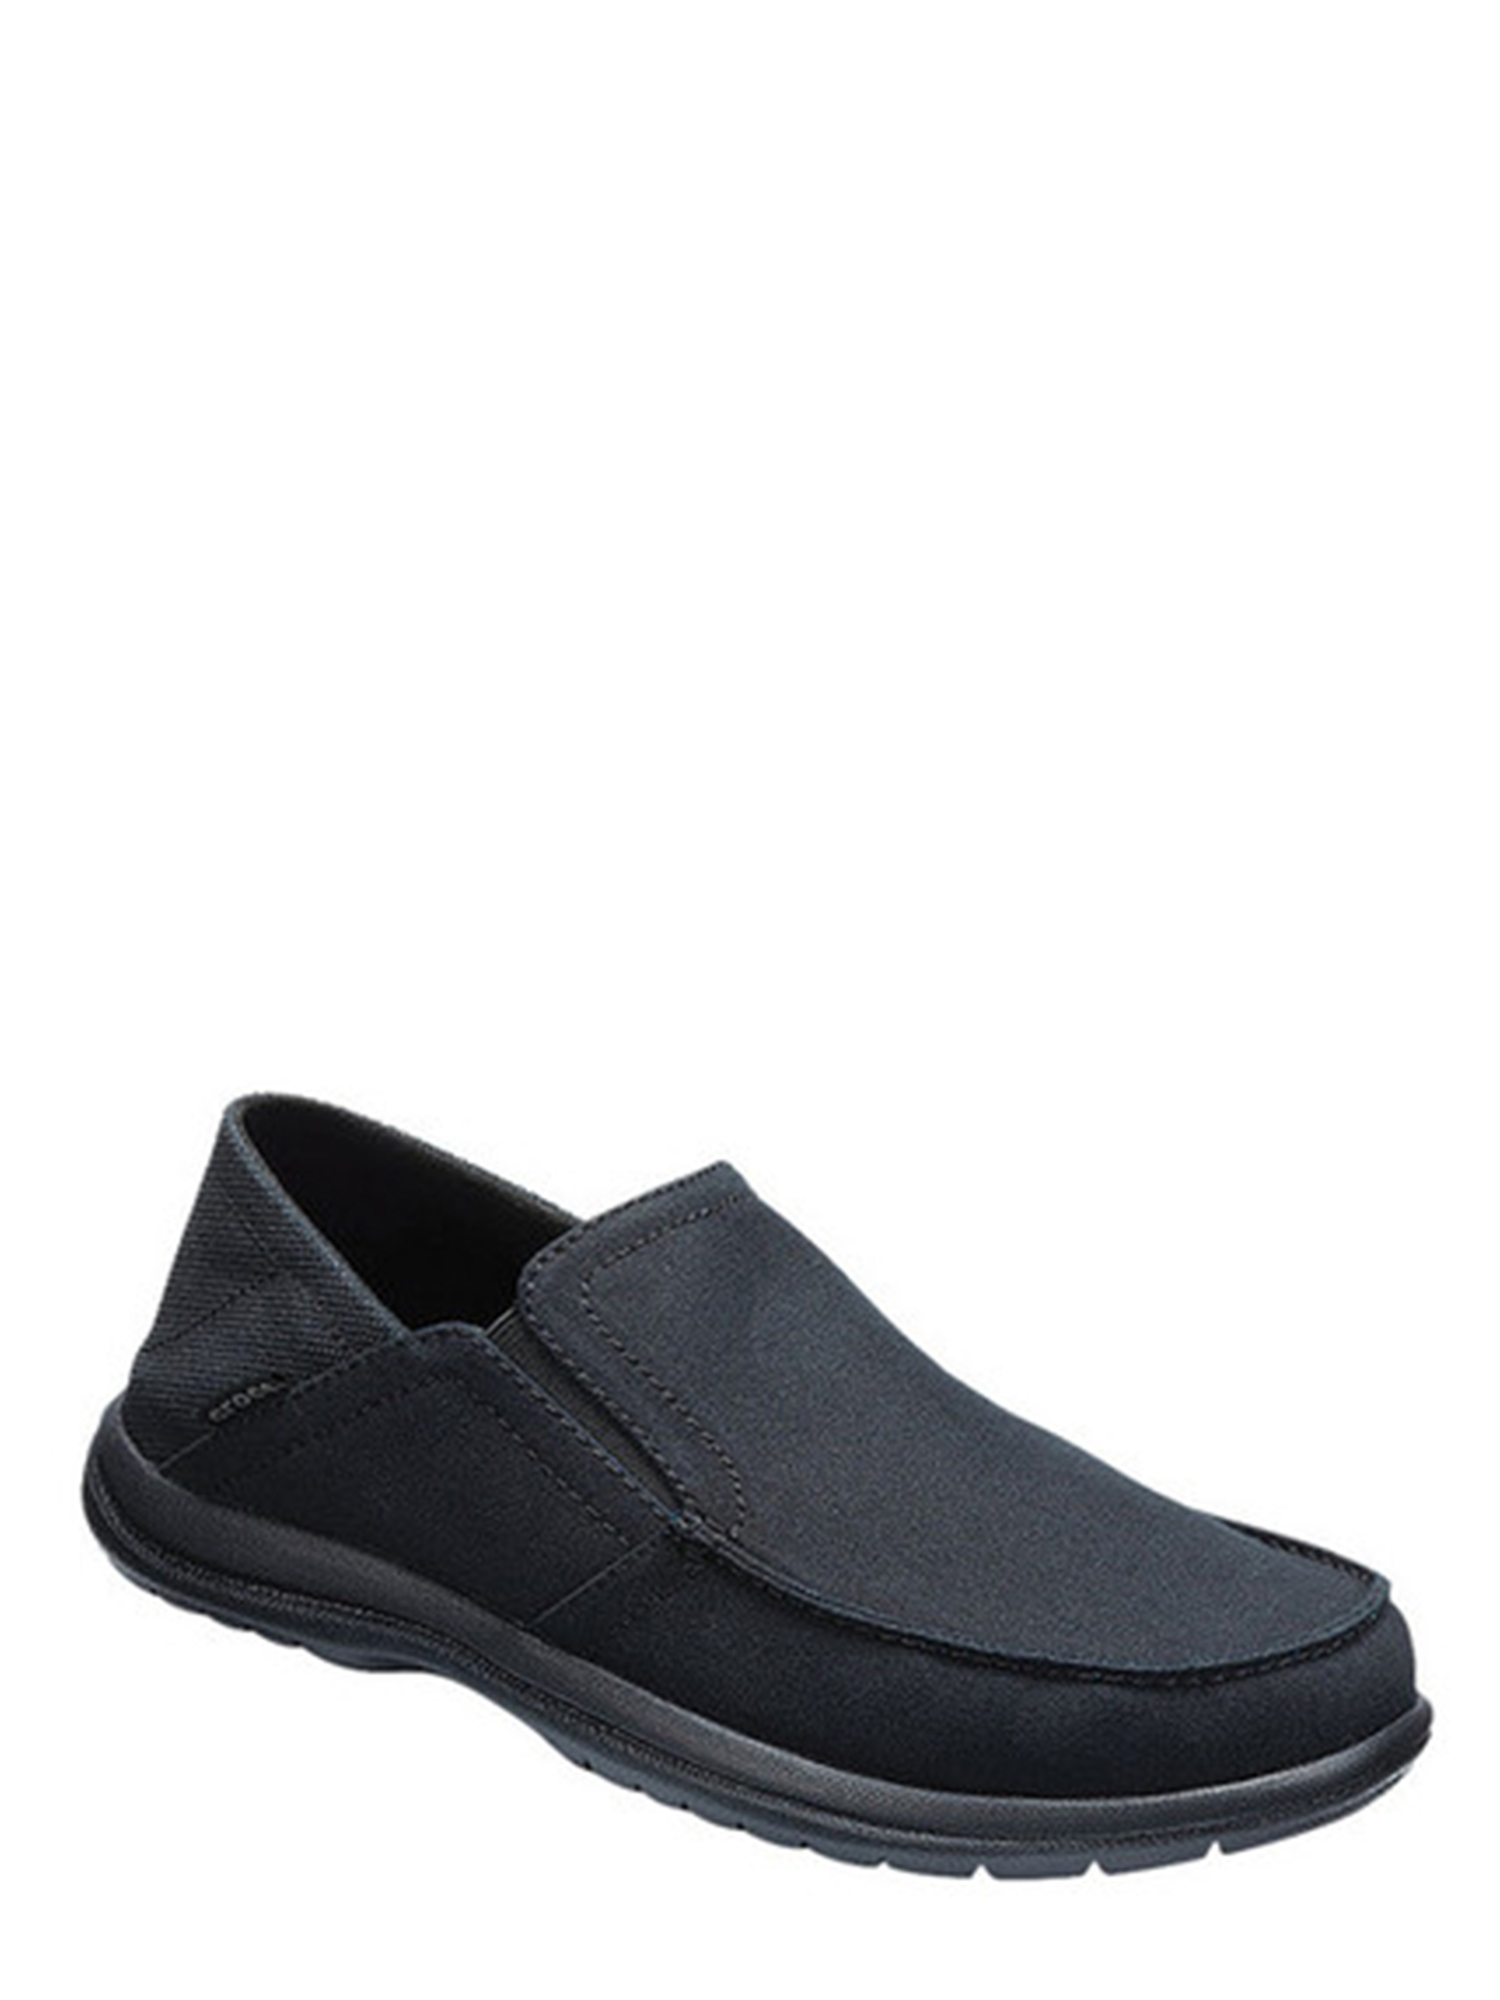 Crocs Men's Santa Cruz Convertible Slip On Loafer - image 1 of 7